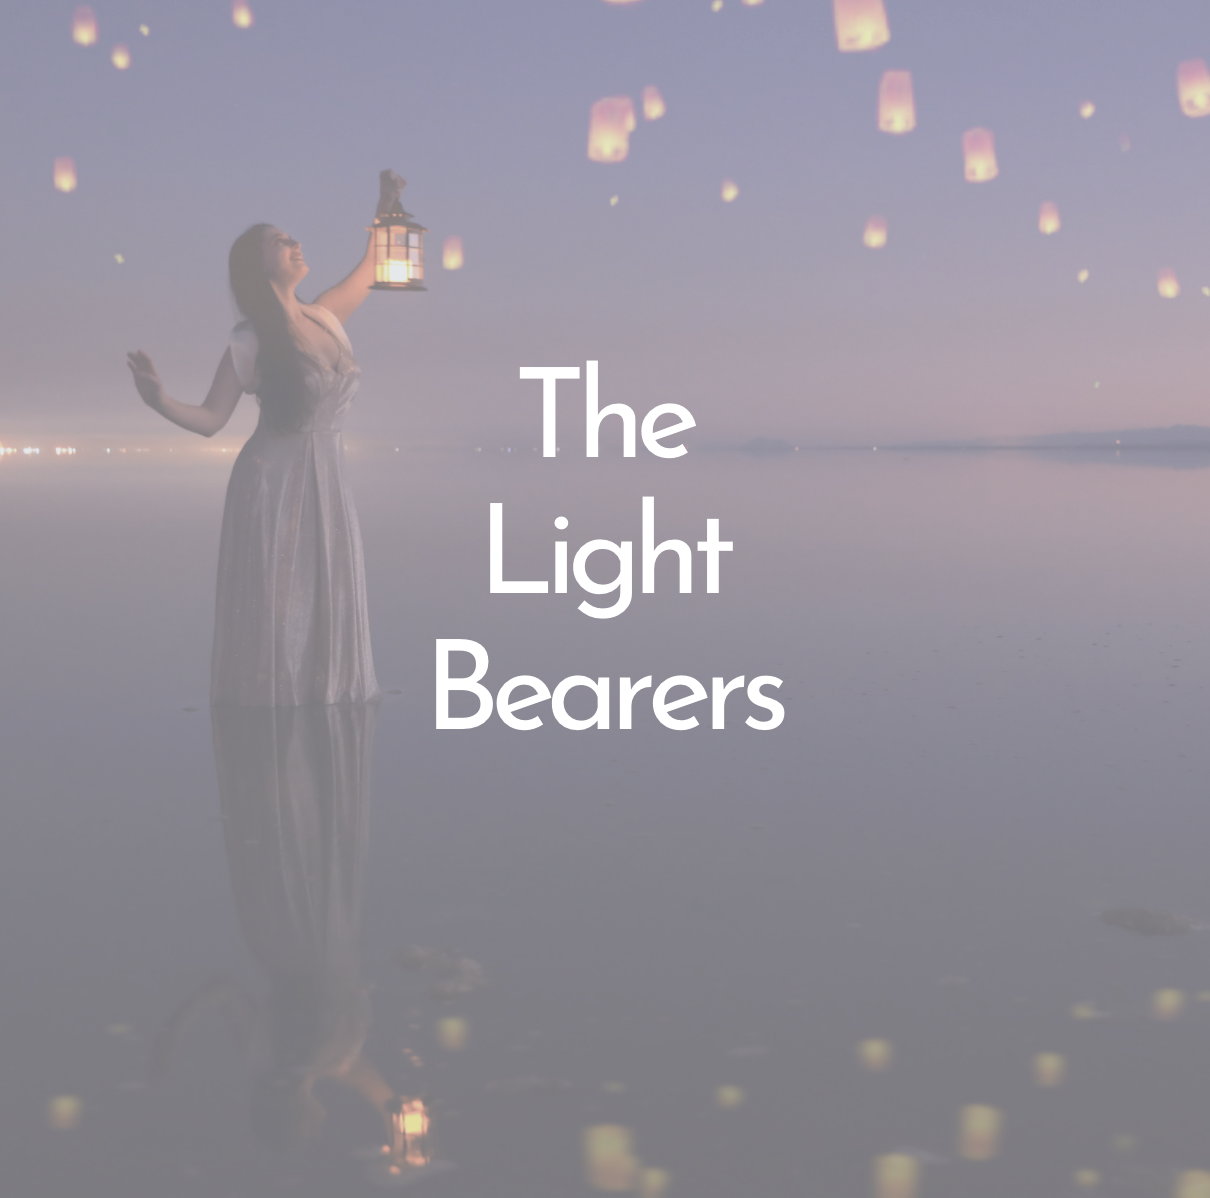 The Light bearers